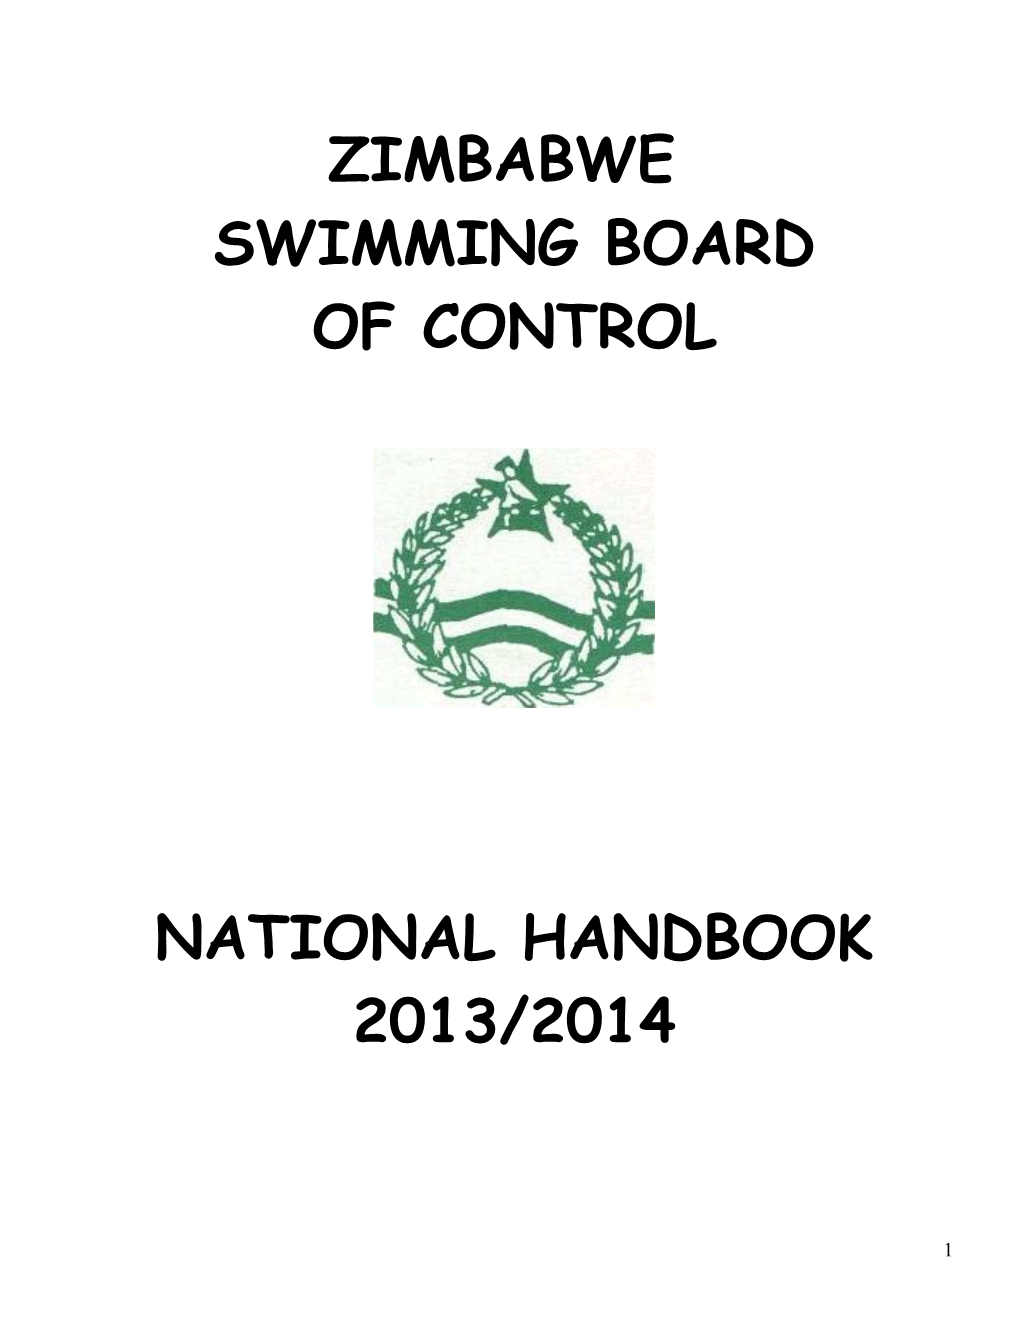 National Handbook